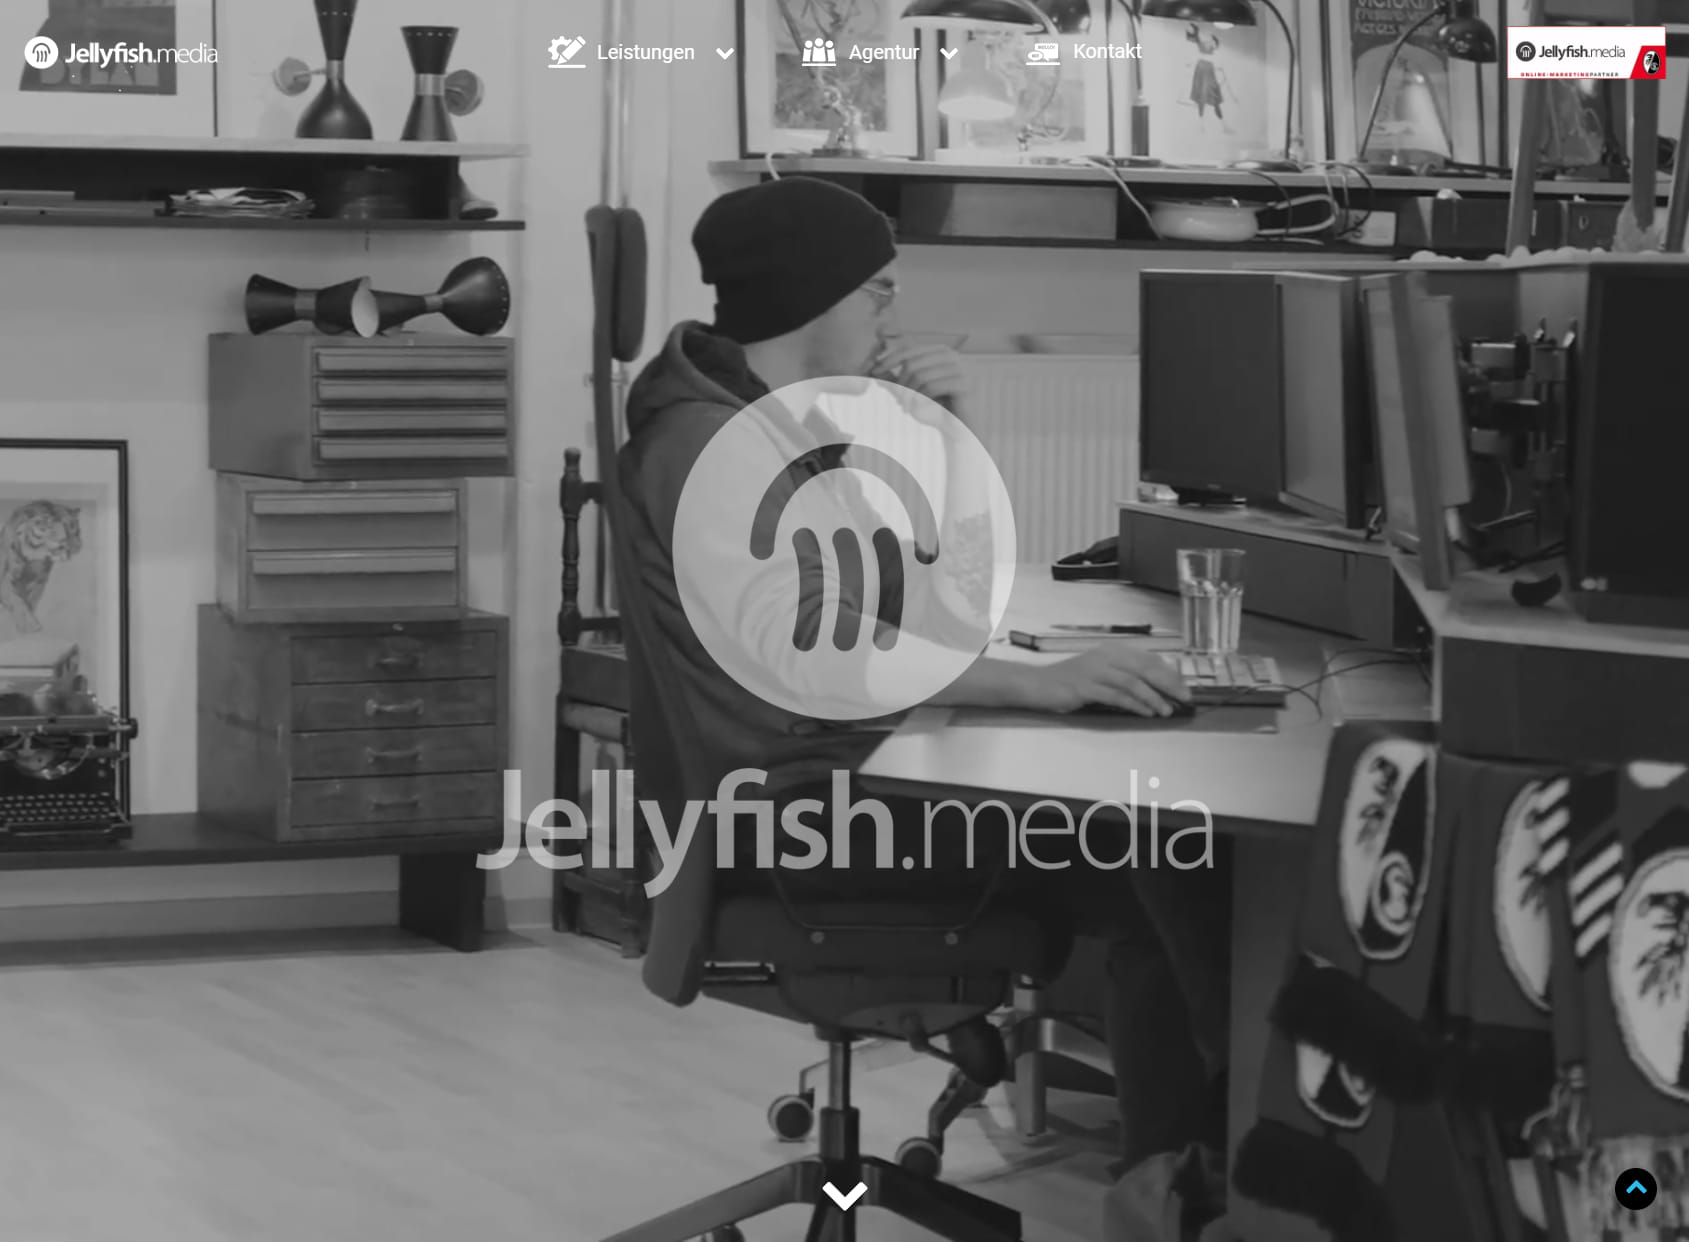 Jellyfish.media GmbH